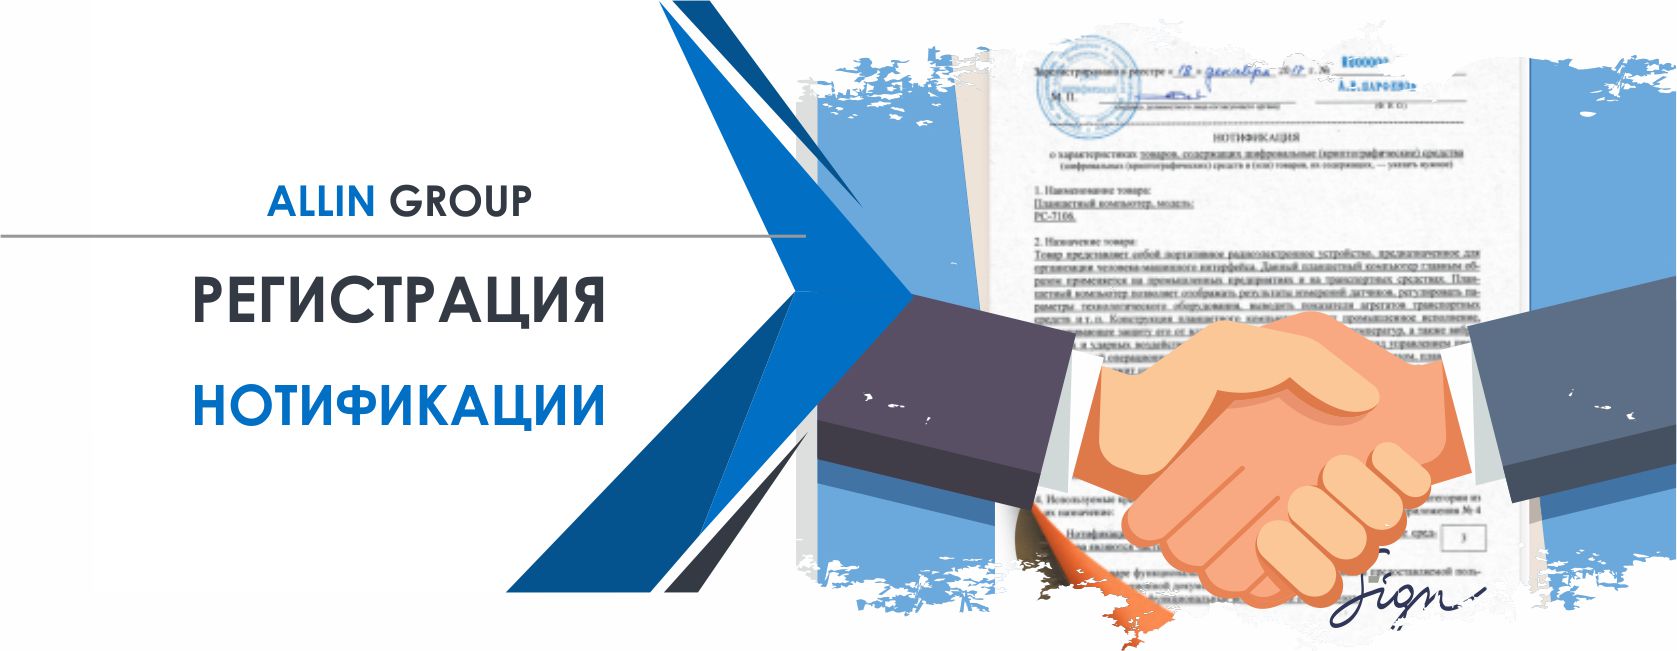 Регистрация Нотификации в Казахстане